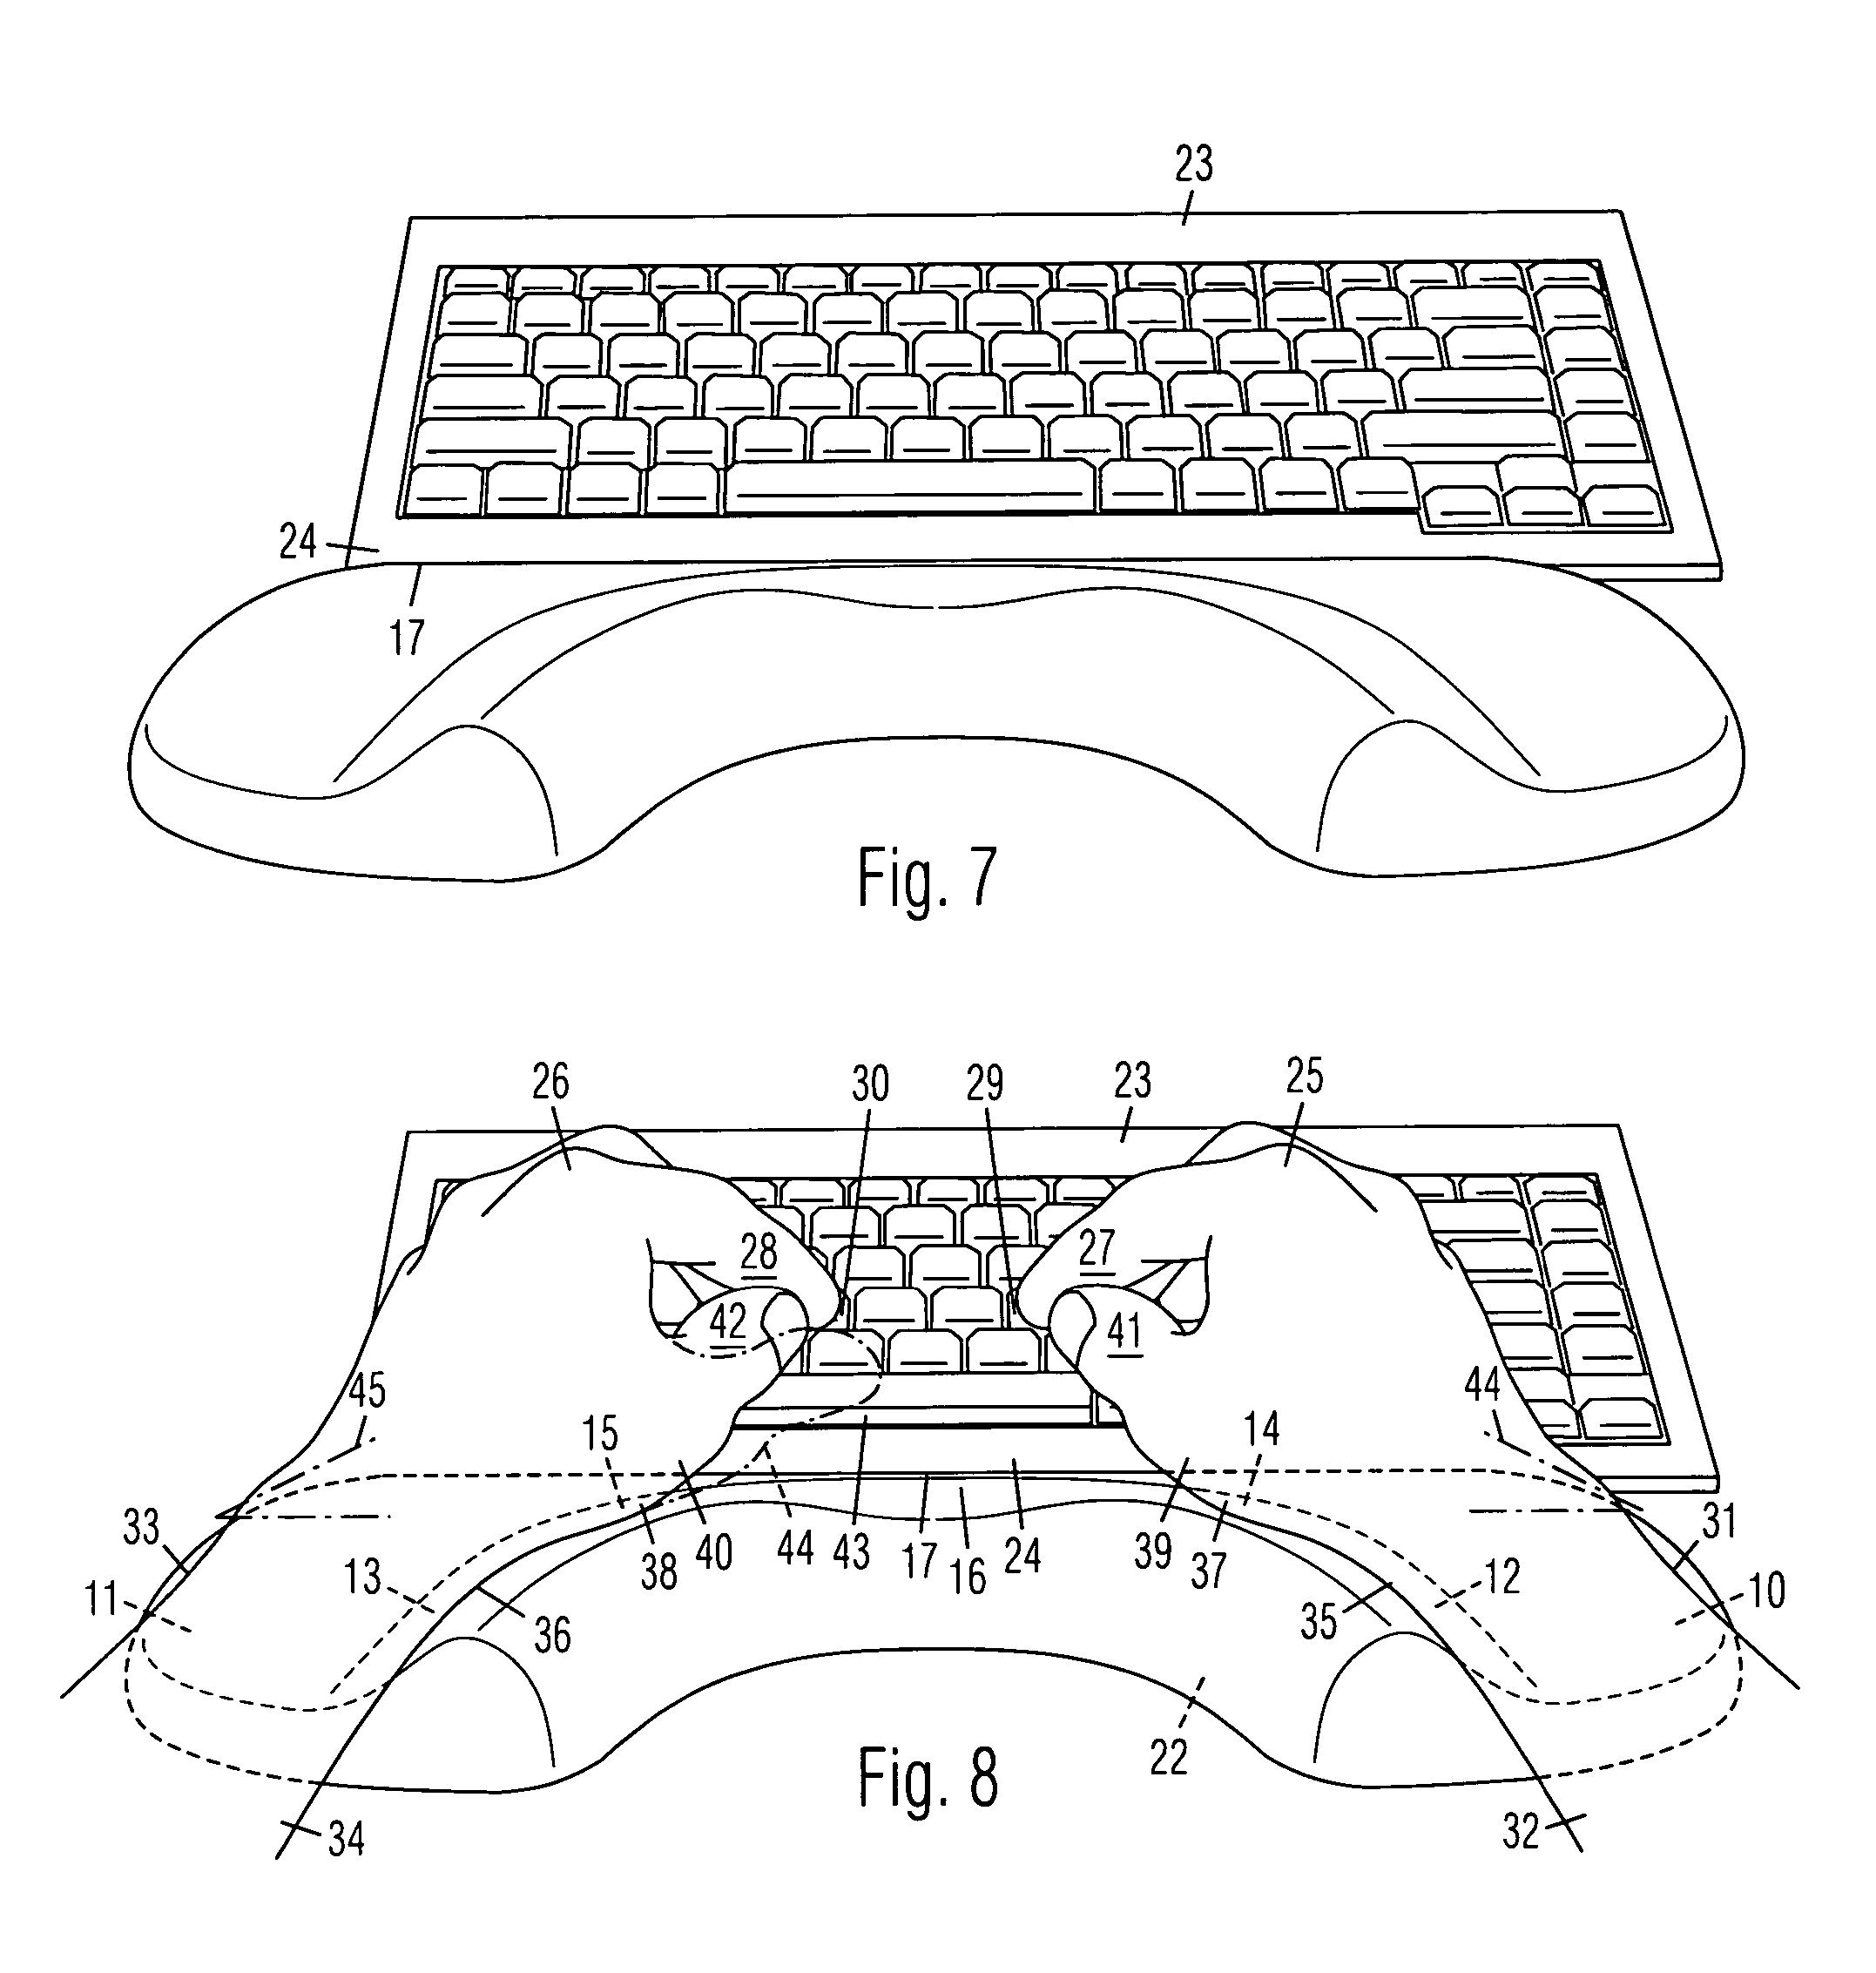 Computer keyboard wrist pad